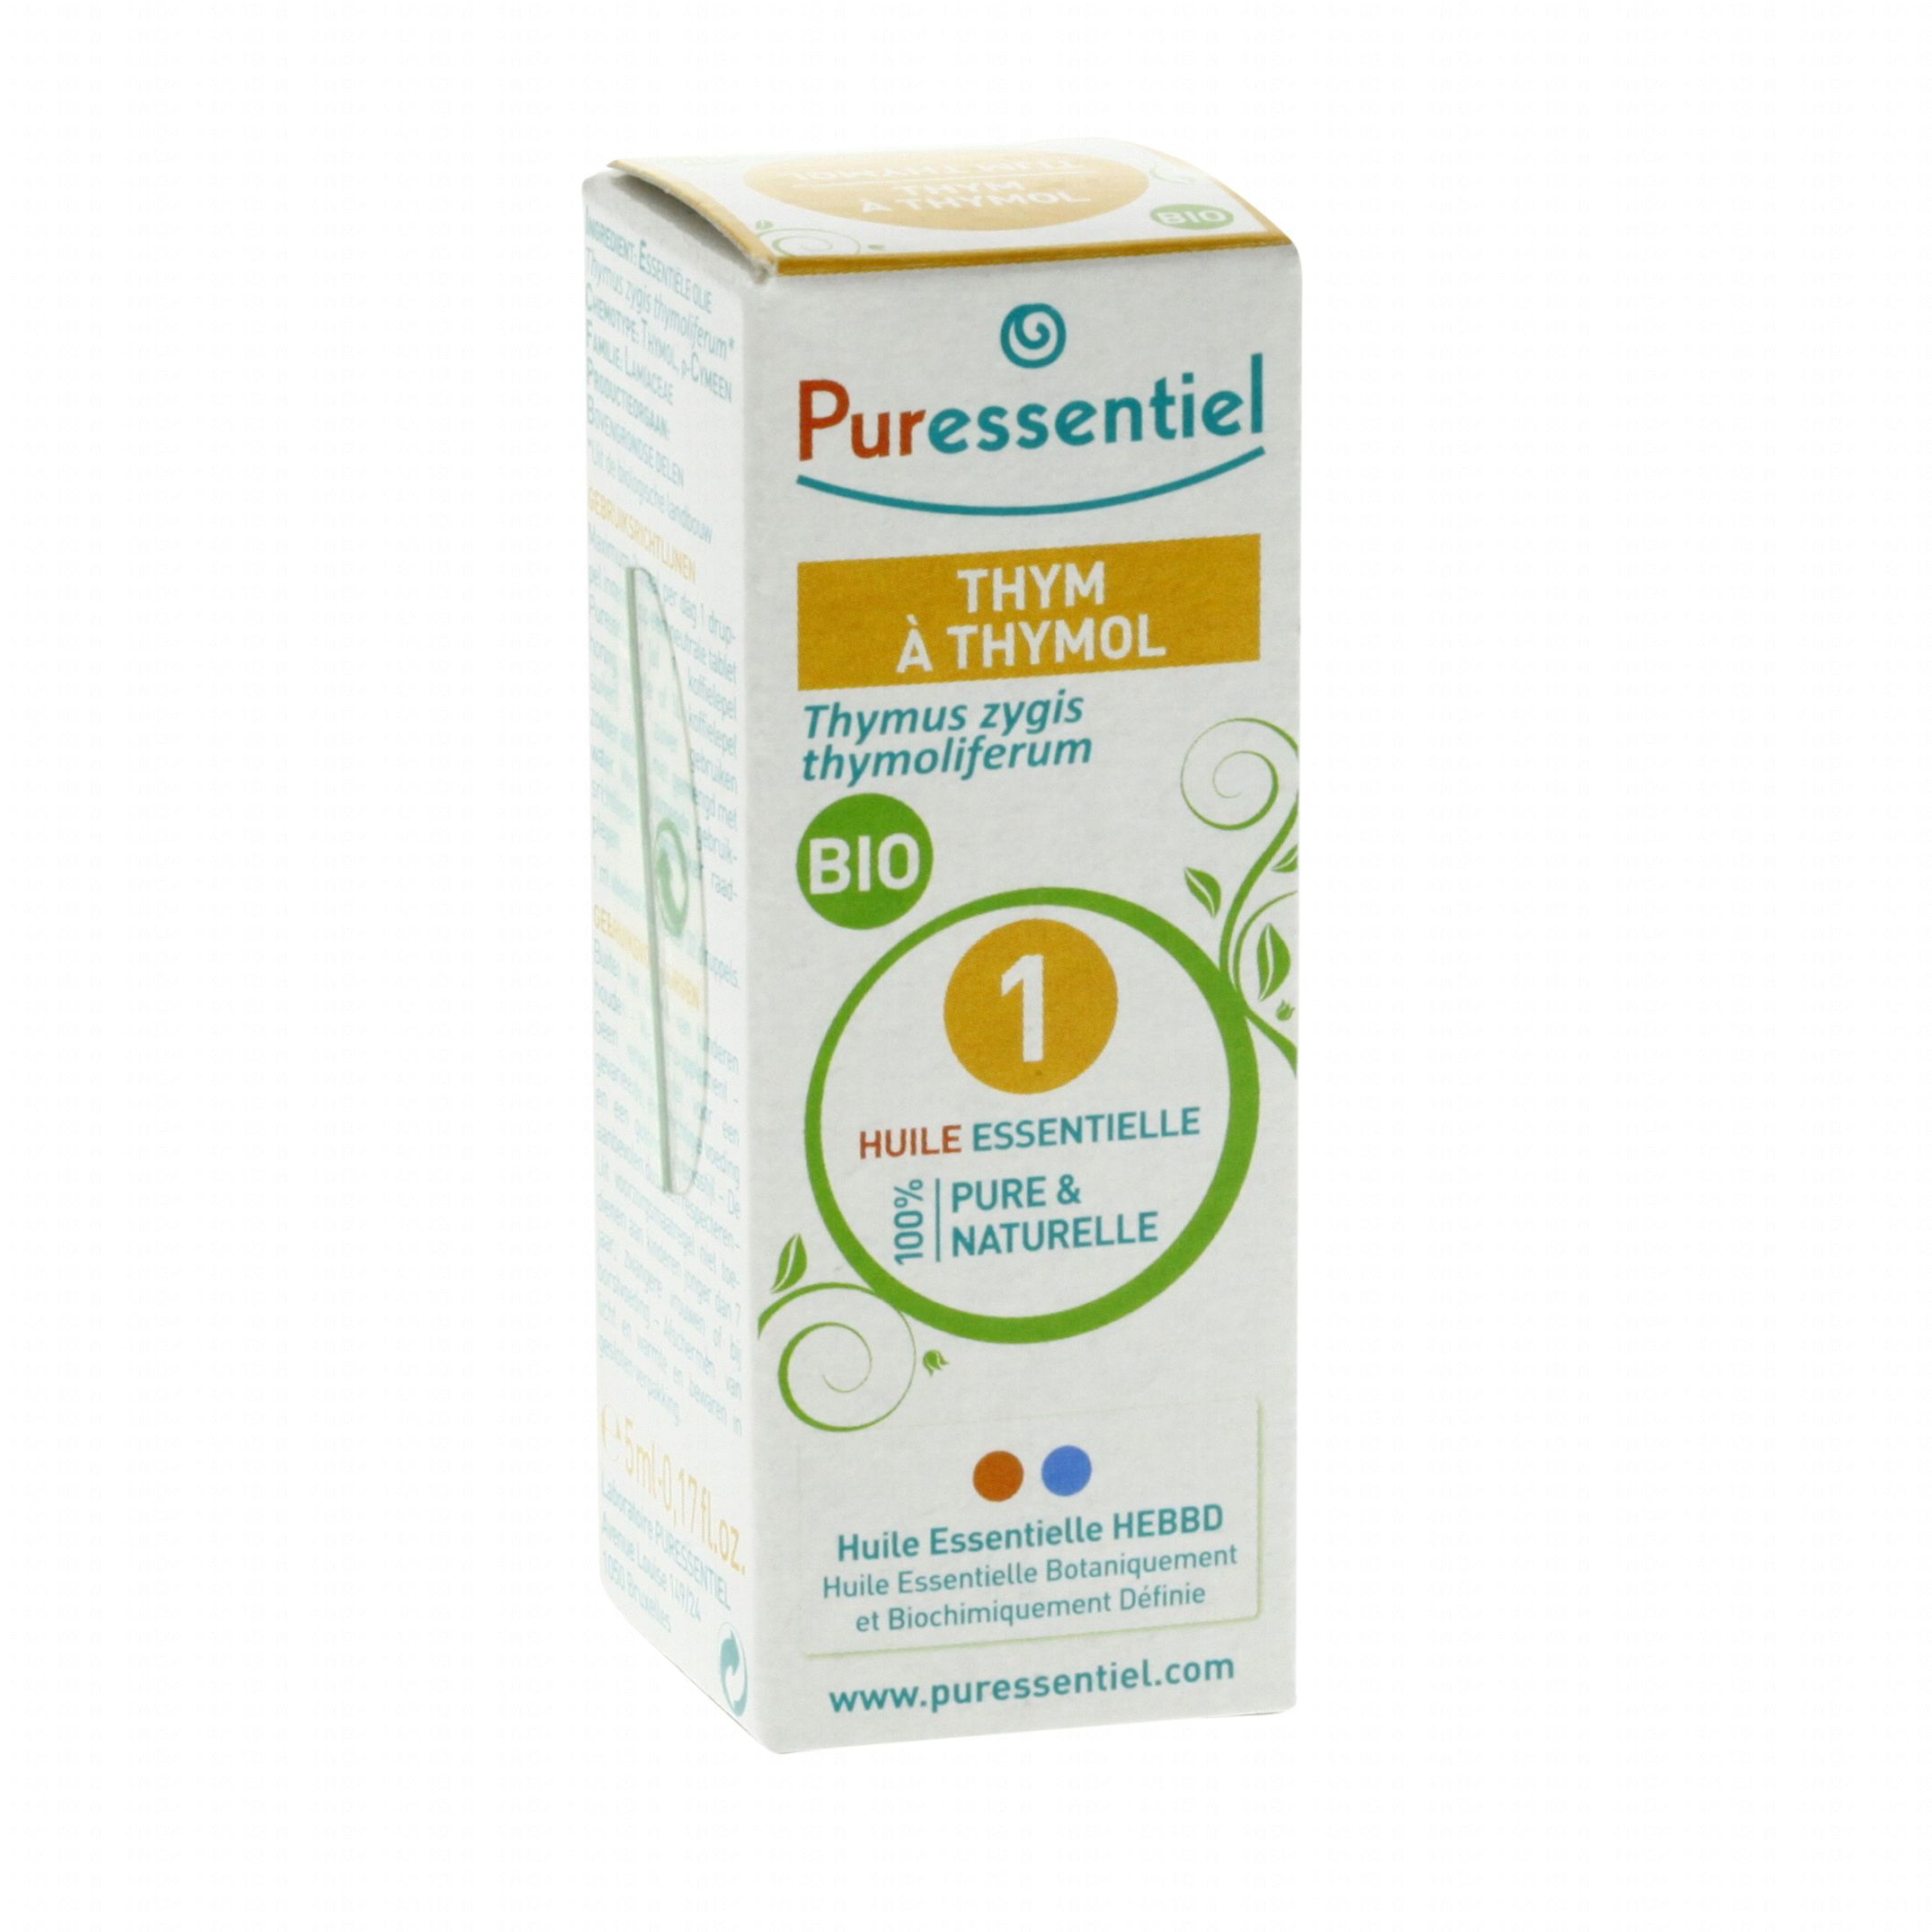 Grande Pharmacie Mouysset - Parapharmacie Puressentiel Huiles Essentielles  - Hebbd Thym à Thymol Bio* - 5 Ml - La-Valette-du-Var